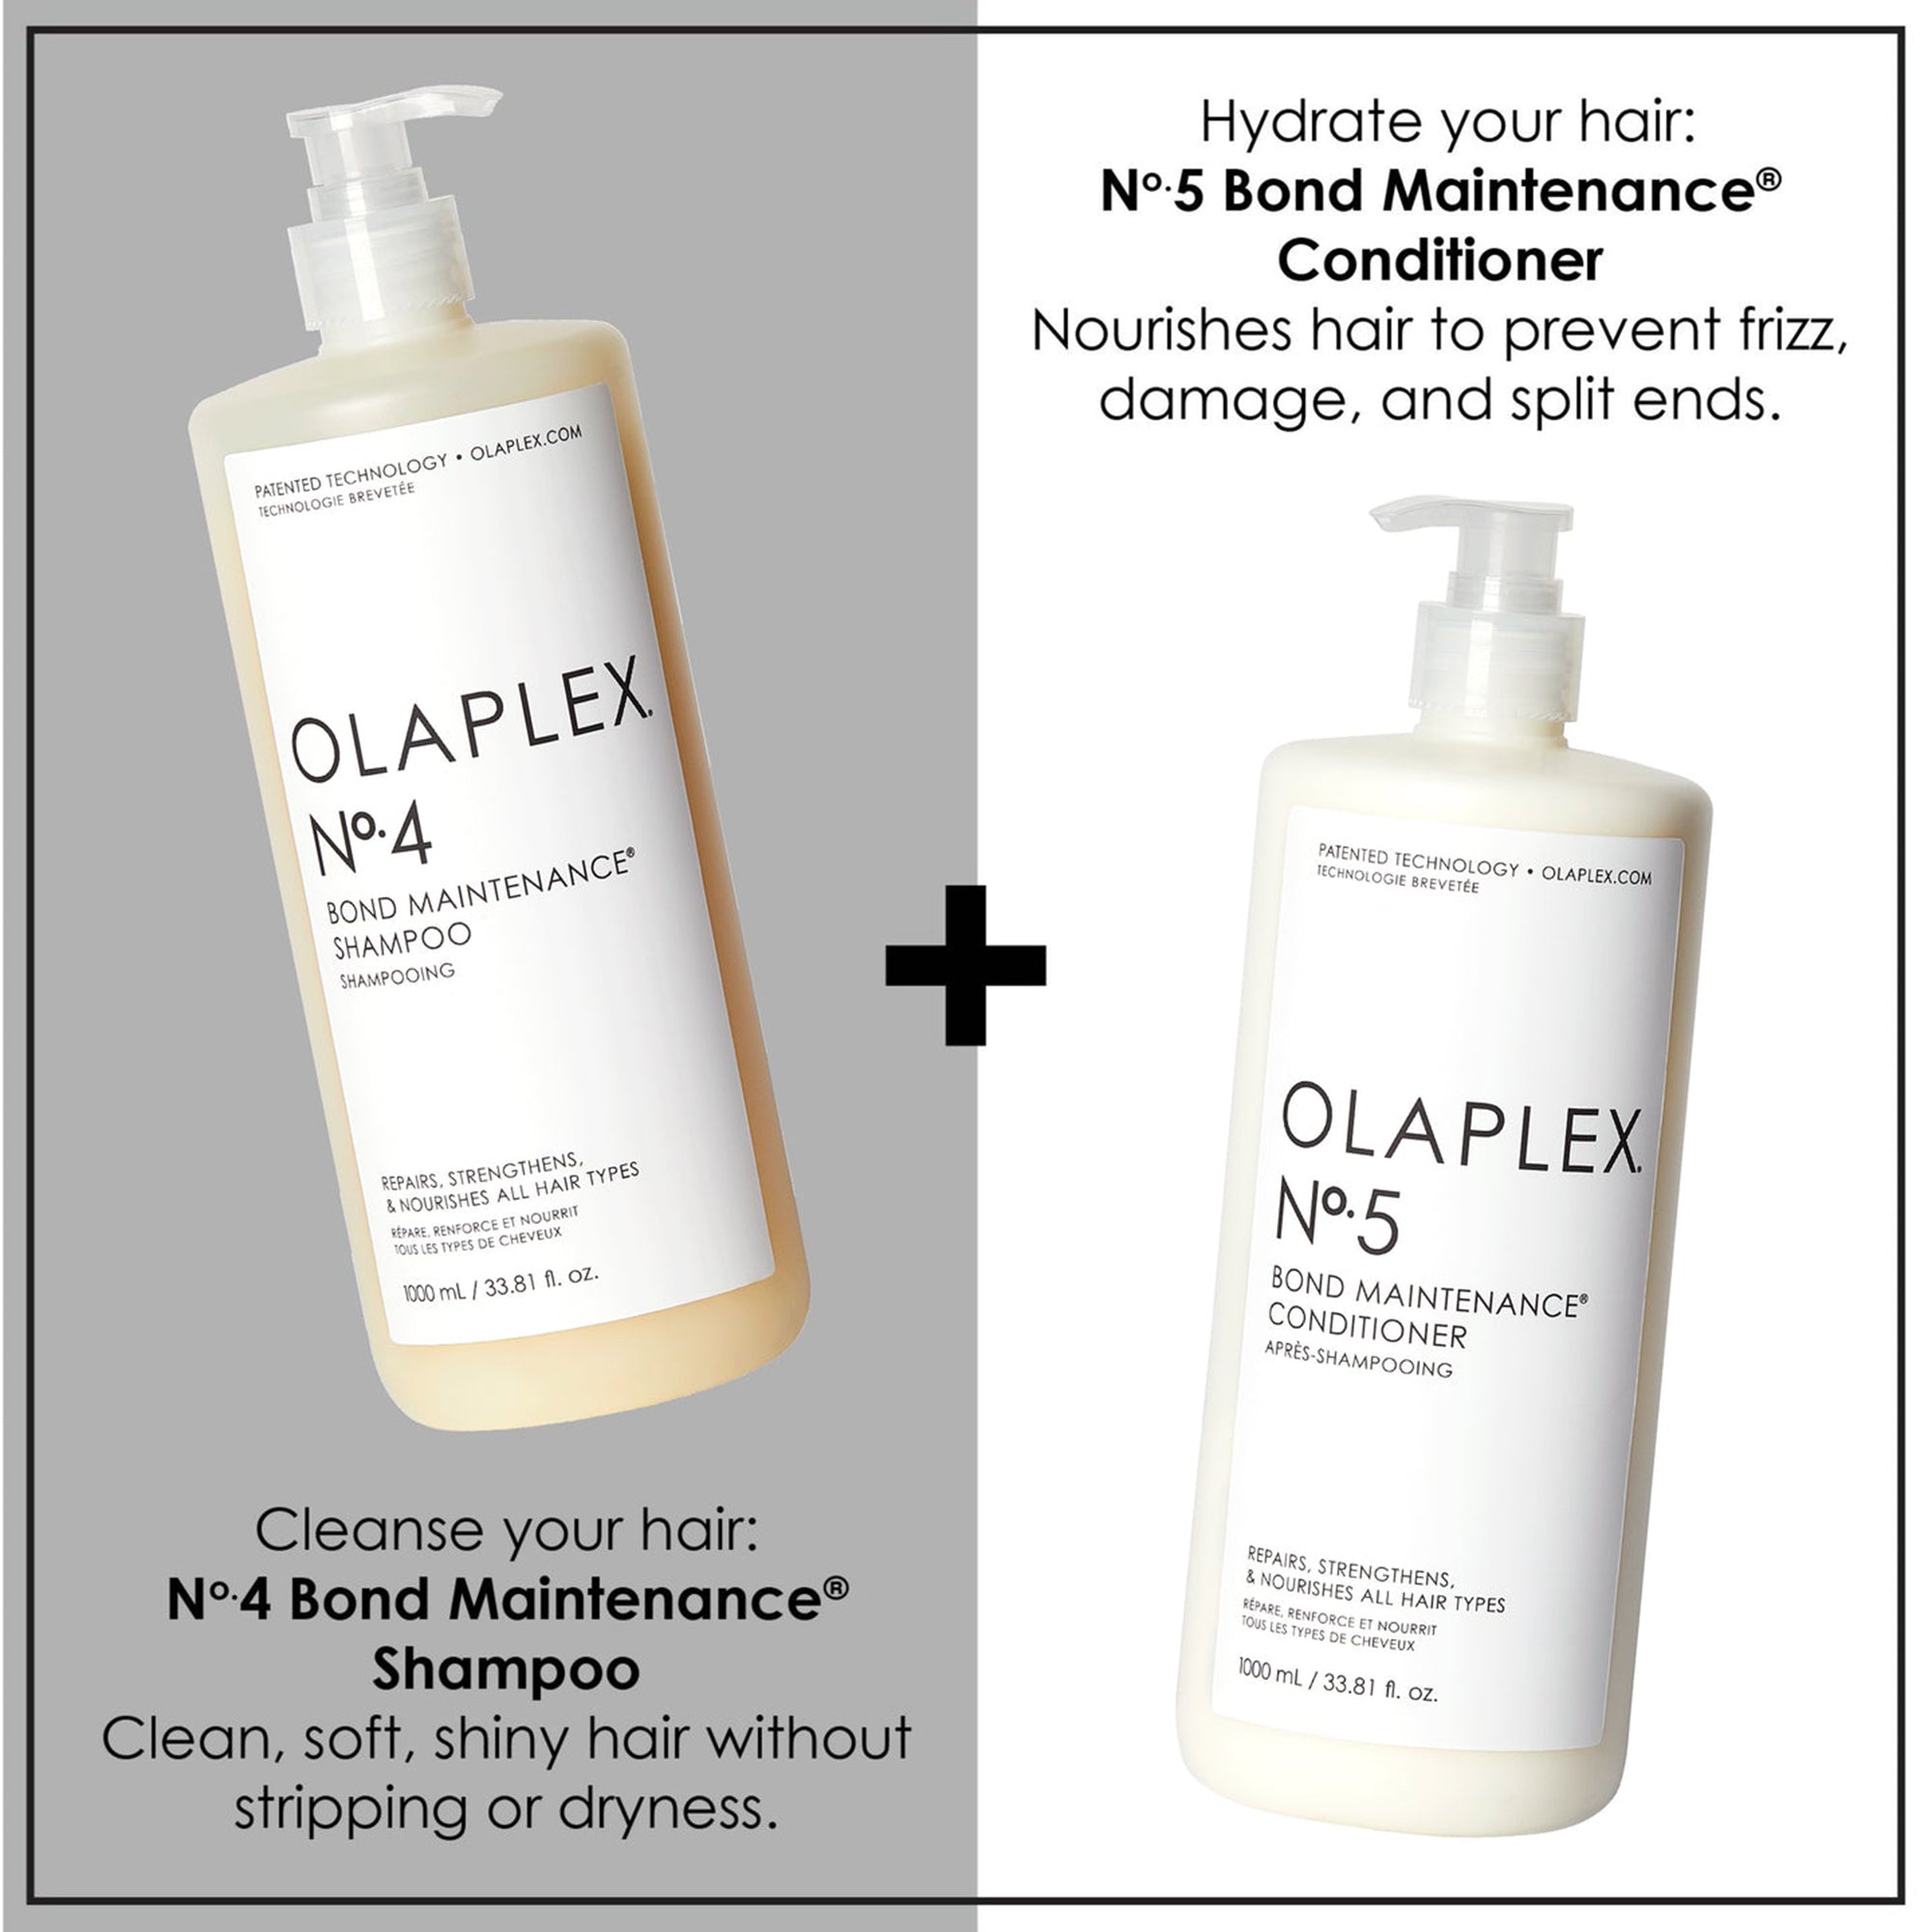 OLAPLEX No.4 Bond Maintenance Shampoo Liter / 33.8OZ